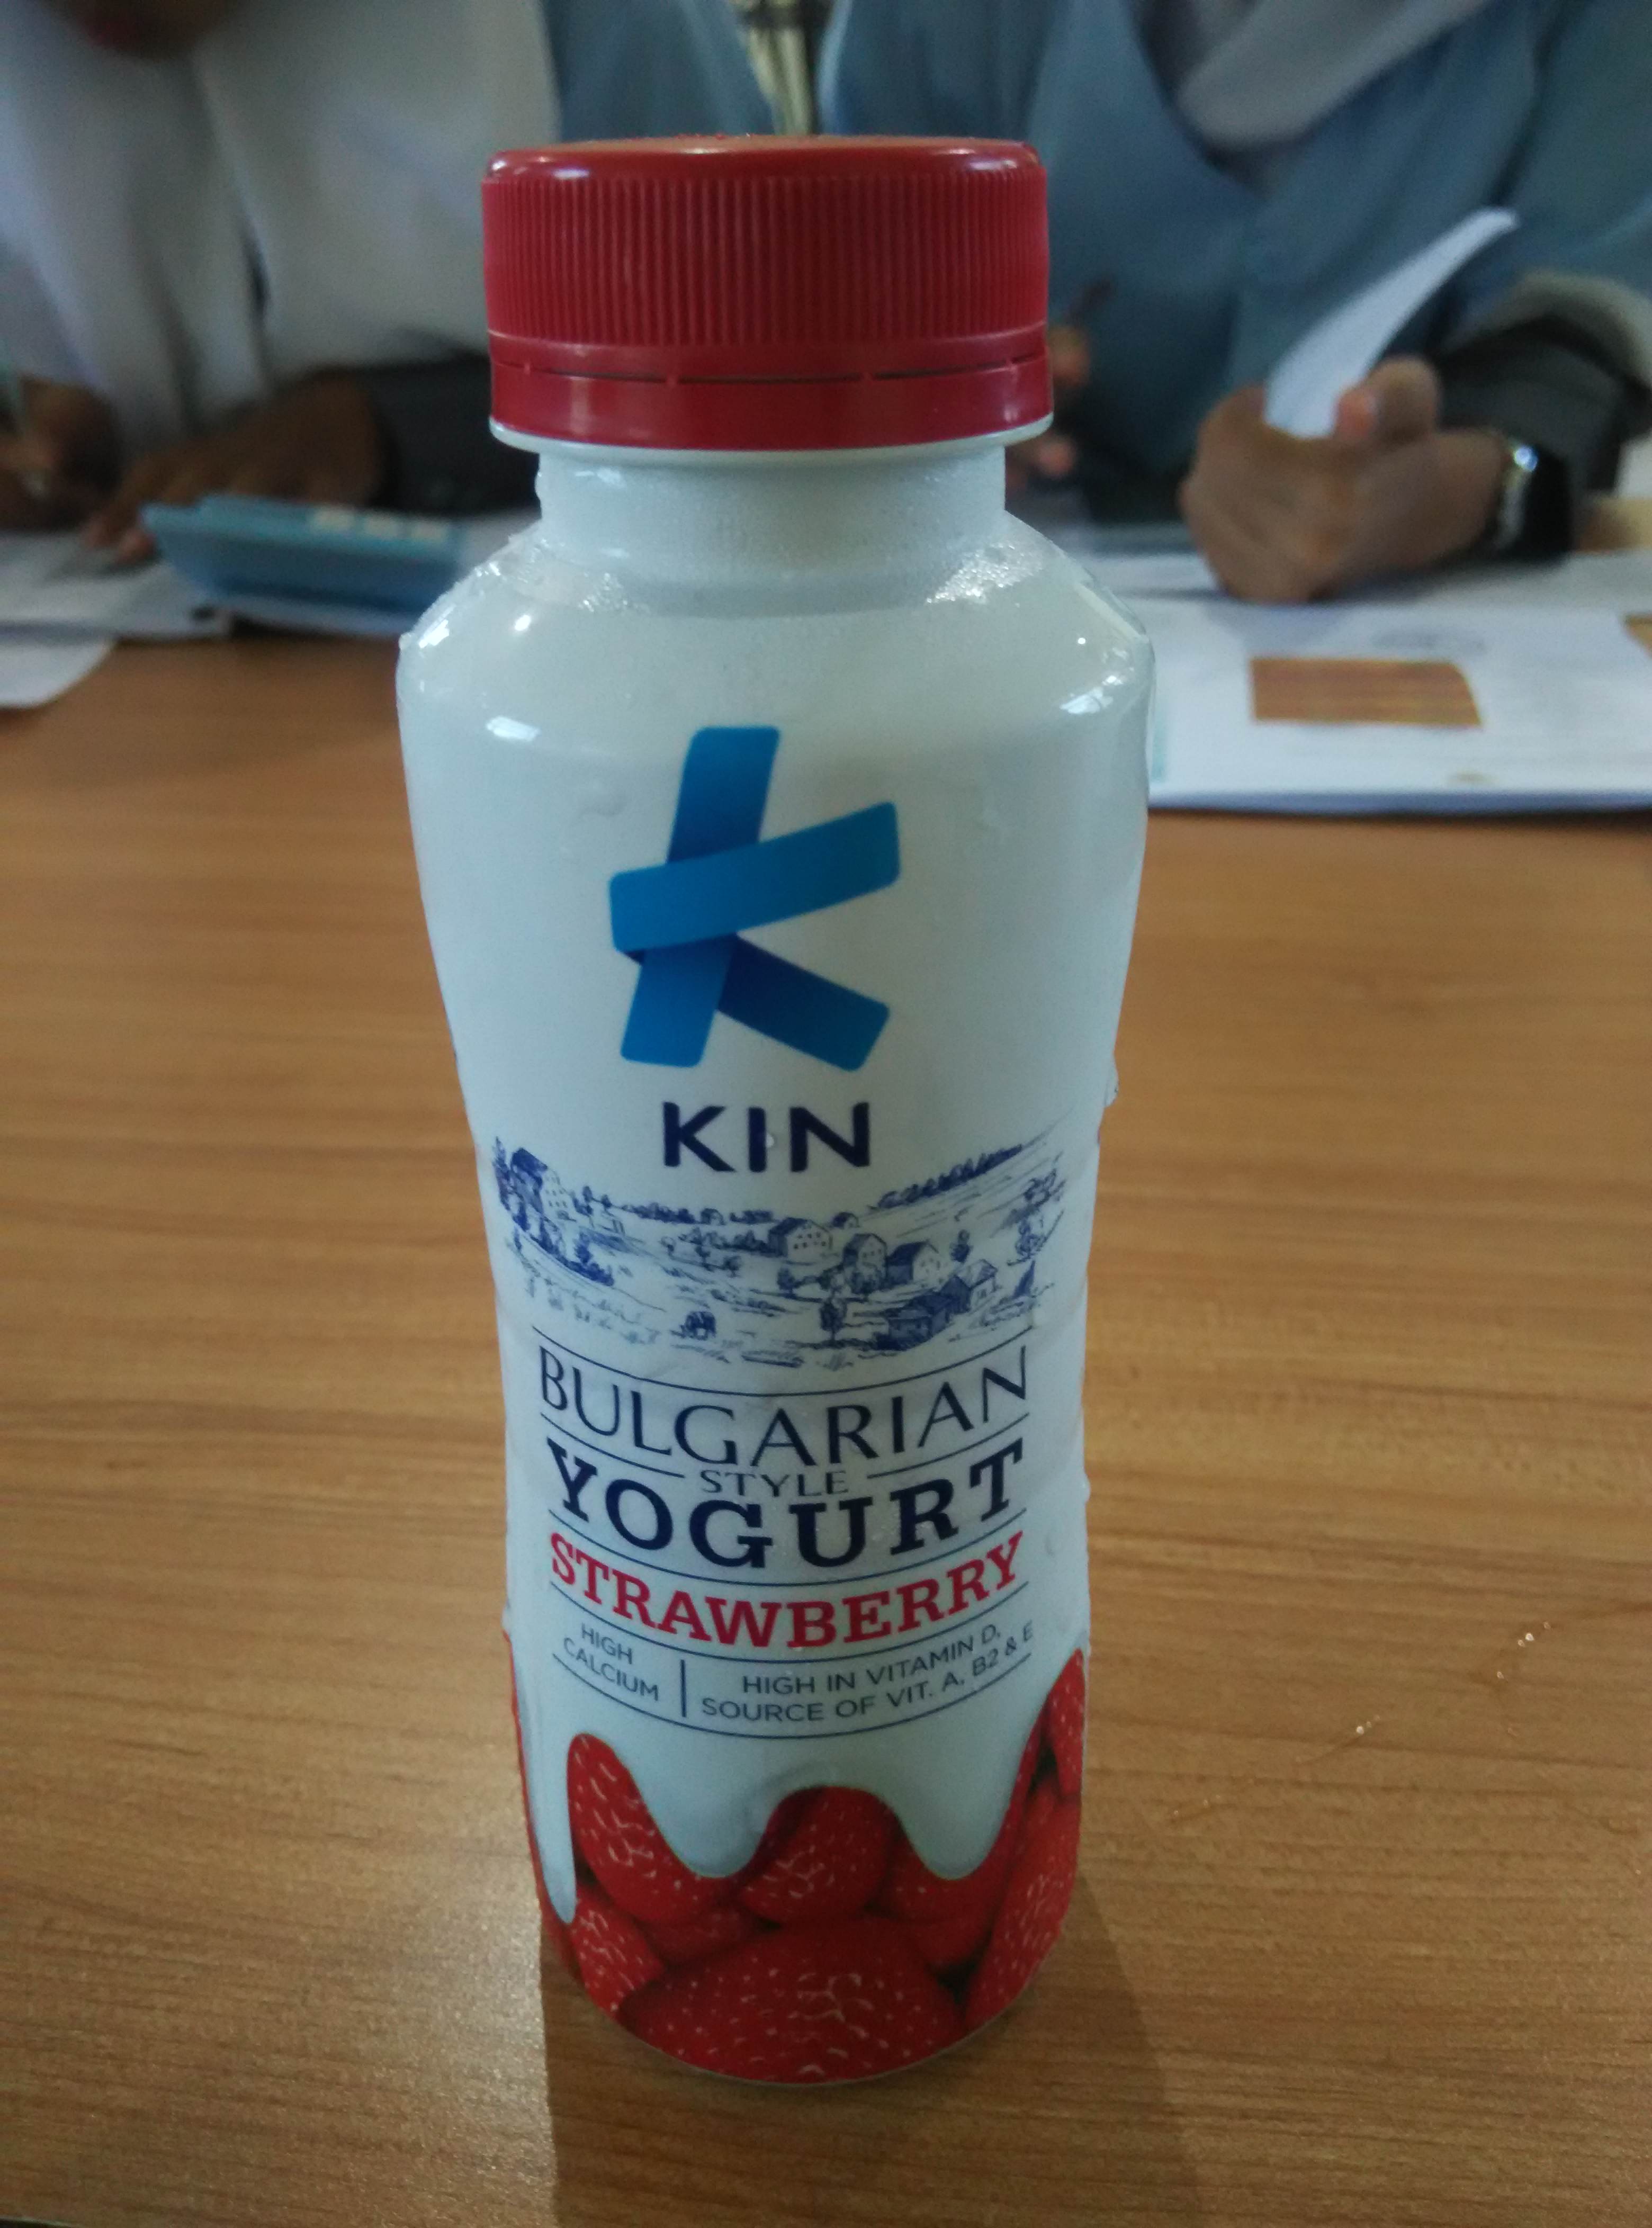 Image produk Kin bulgarian style yogurt strawberry